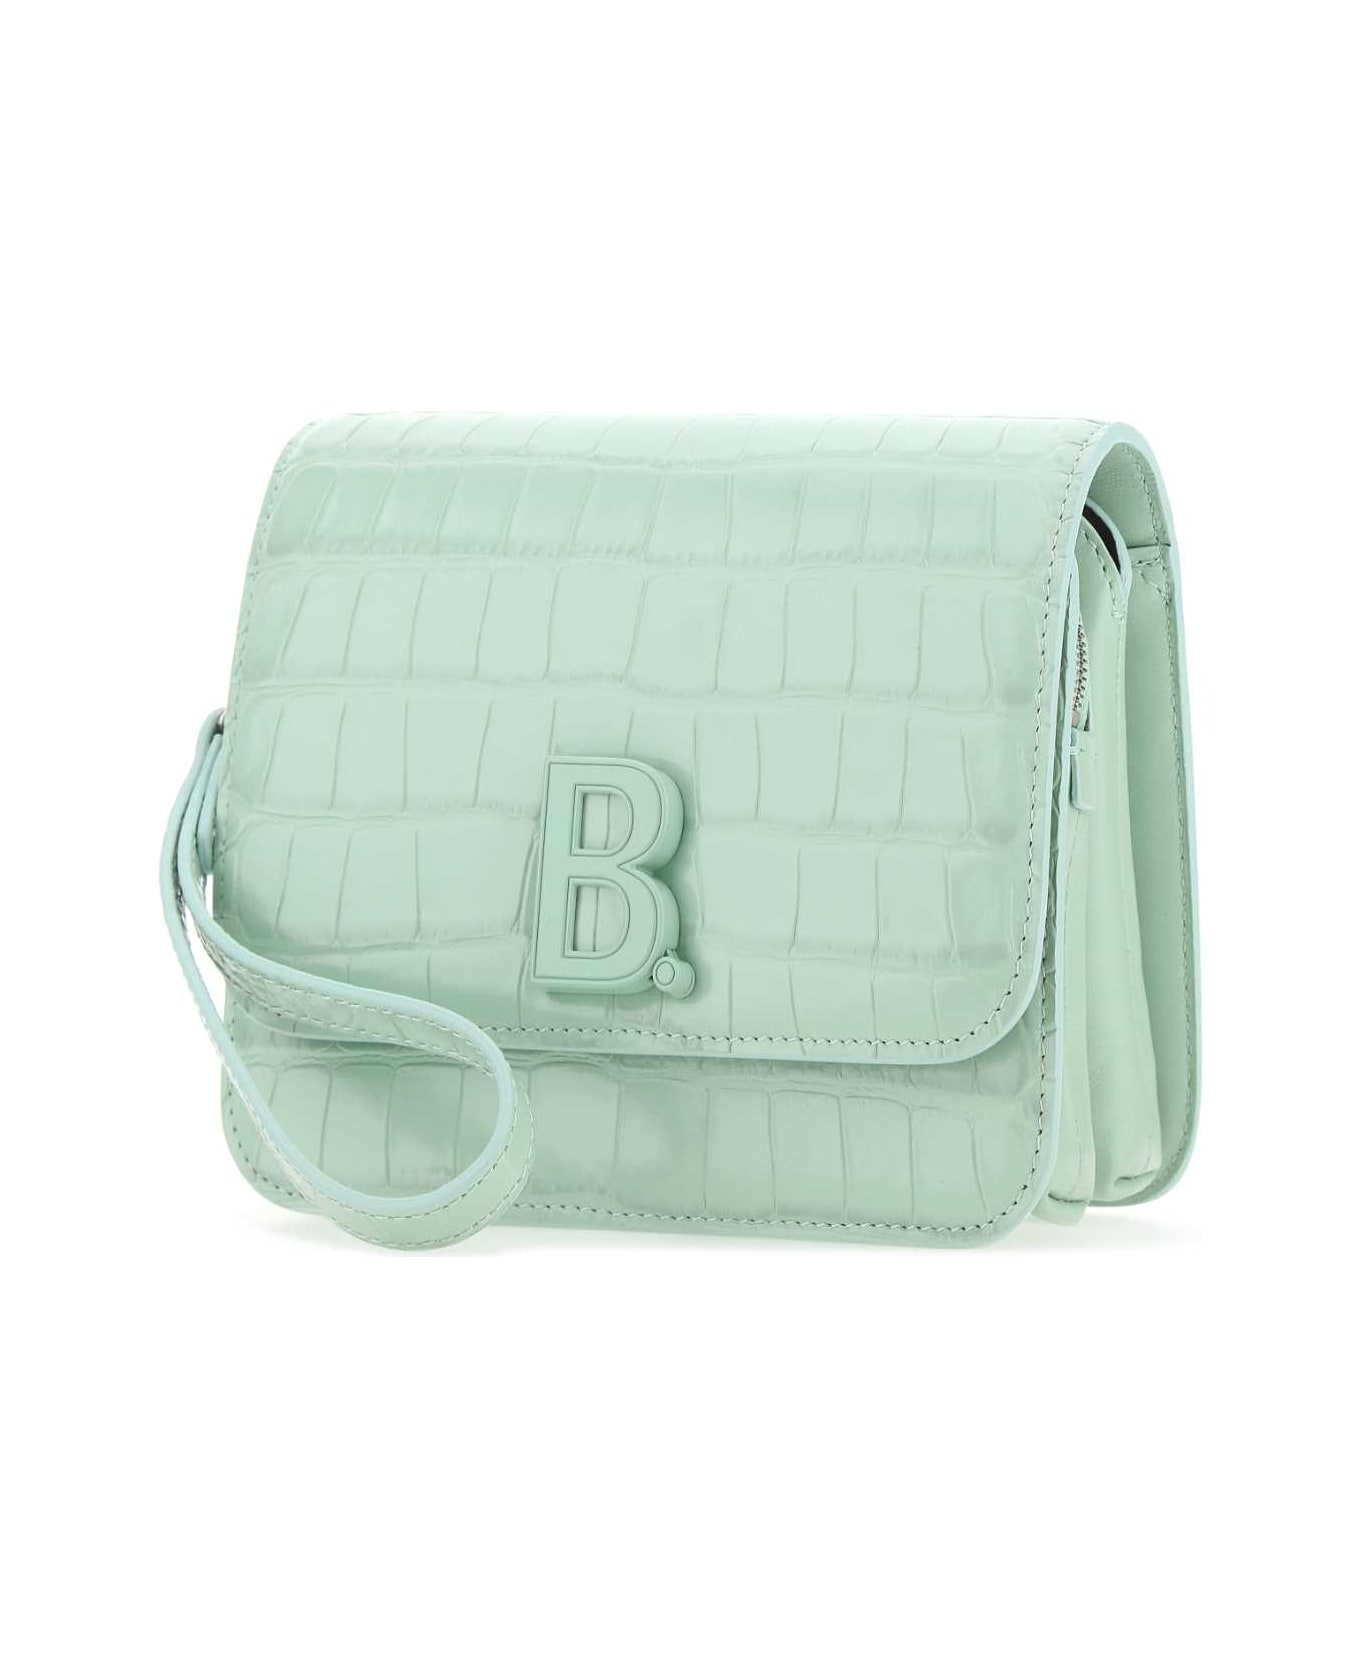 Balenciaga Sea Green Leather Small B Crossbody Bag - 3906 ショルダーバッグ